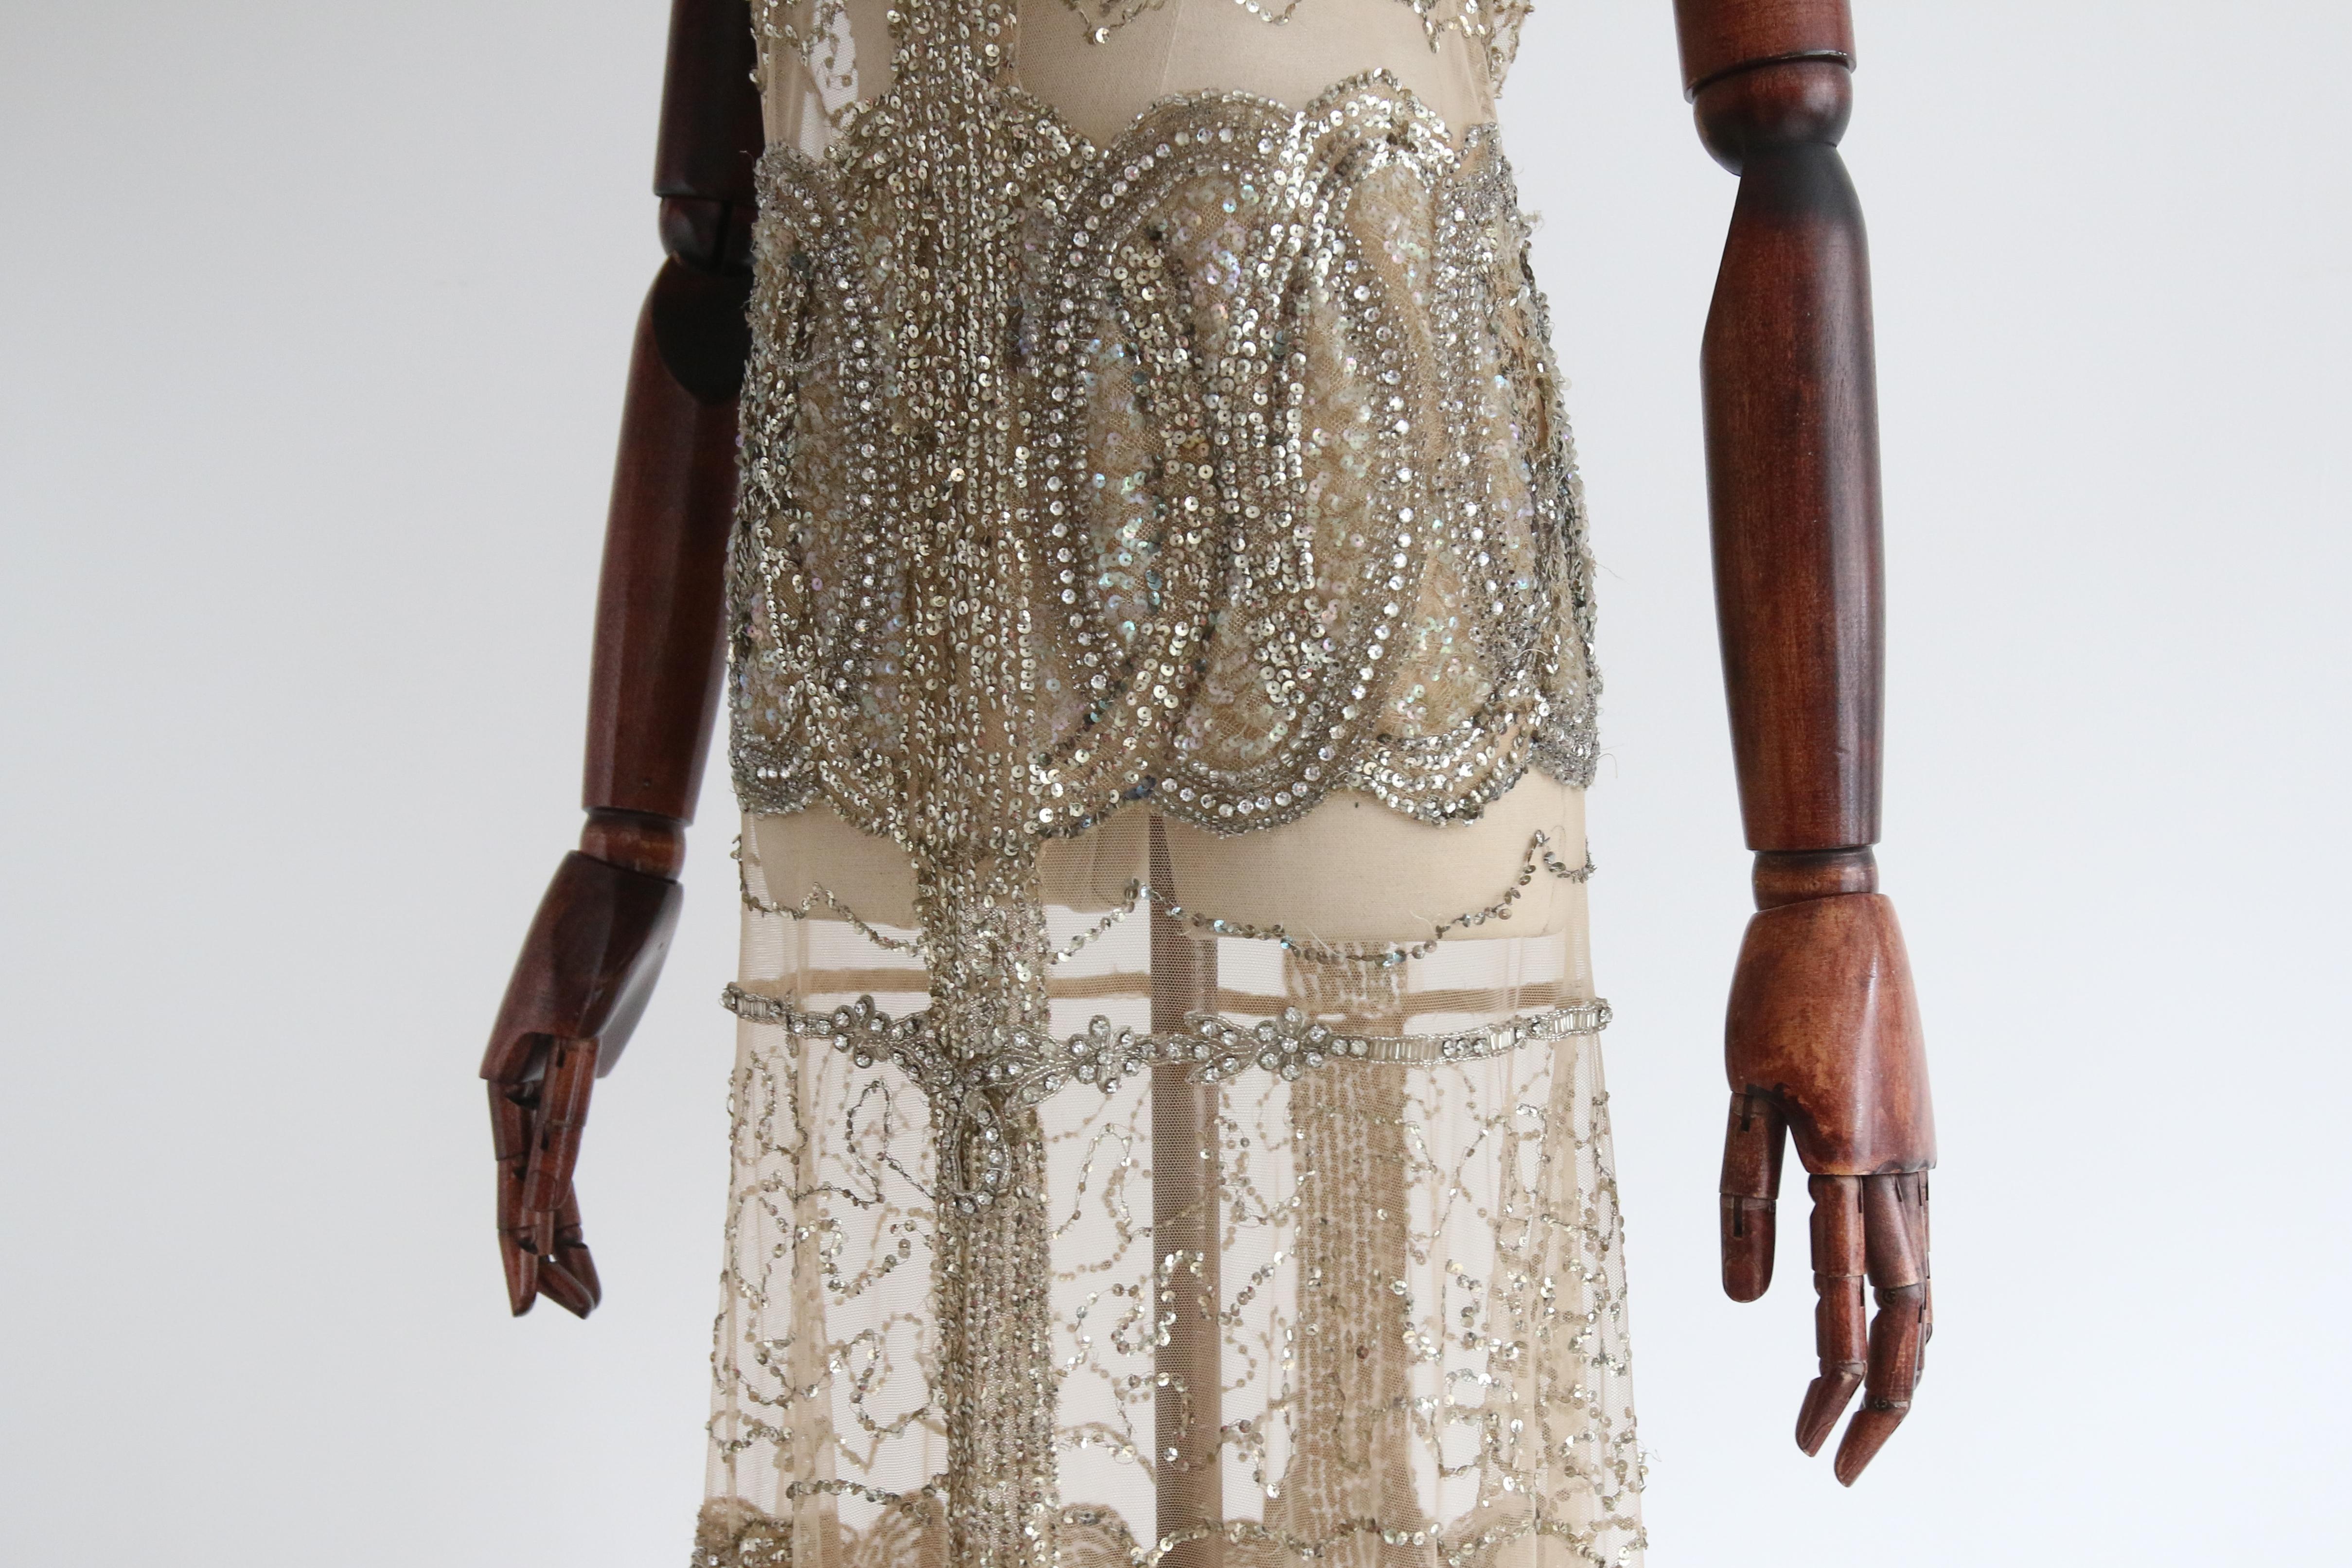 Vintage 1920er Gold Perlen Pailletten Kleid Flapper Kleid UK 6-8 US 2-4 im Angebot 12